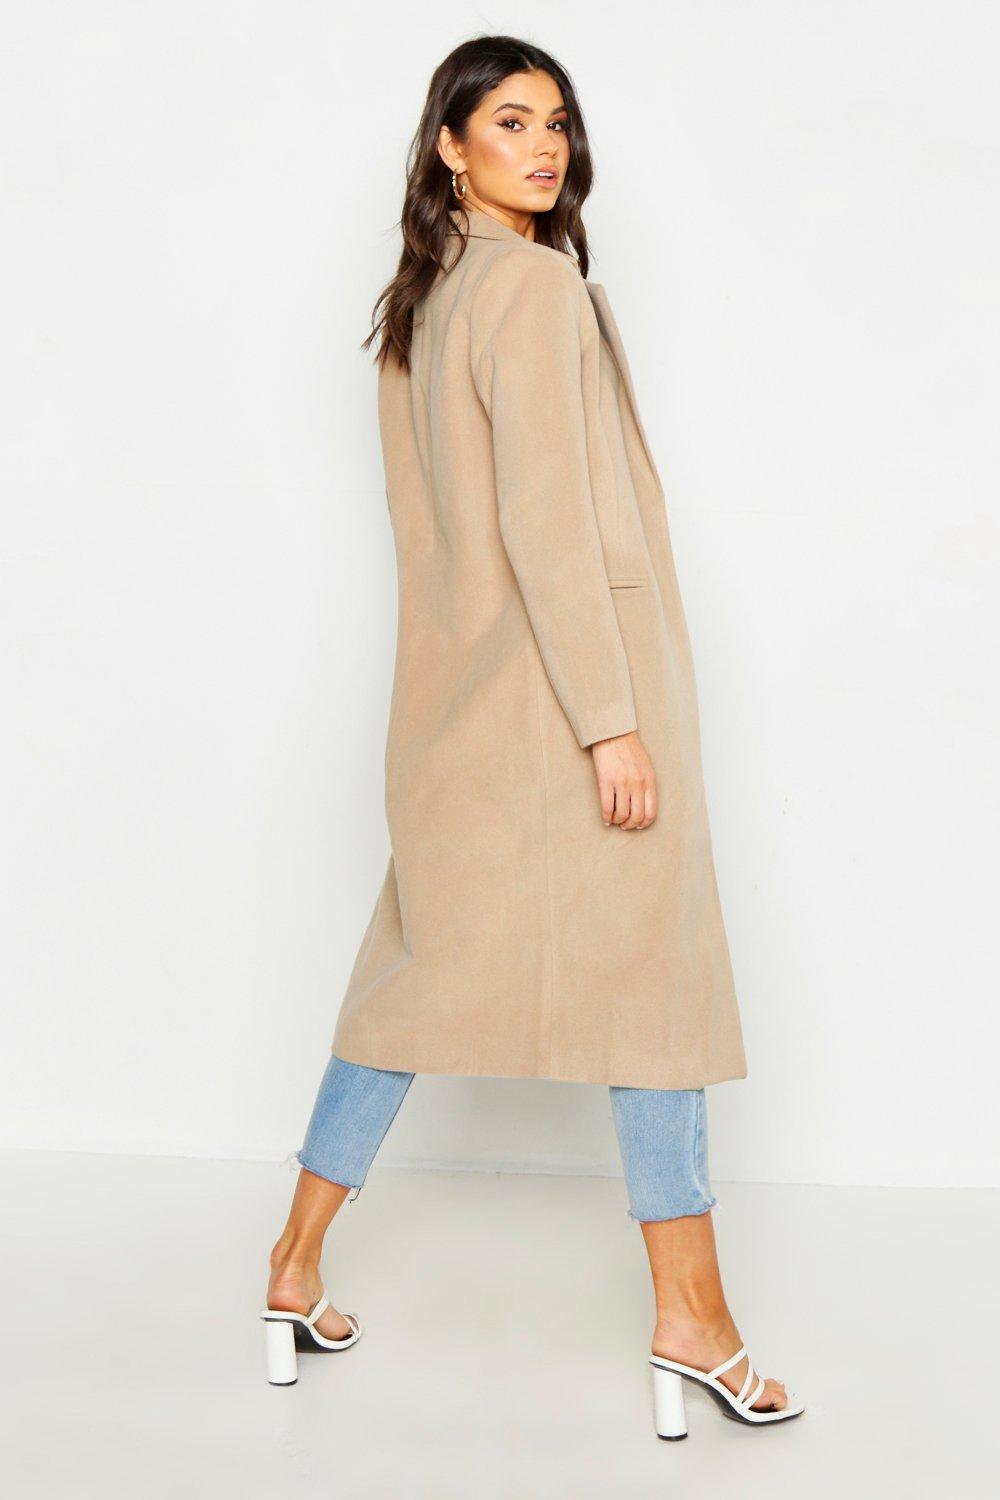 Boohoo Womens Megan Tailored Coat in Camel size M | eBay